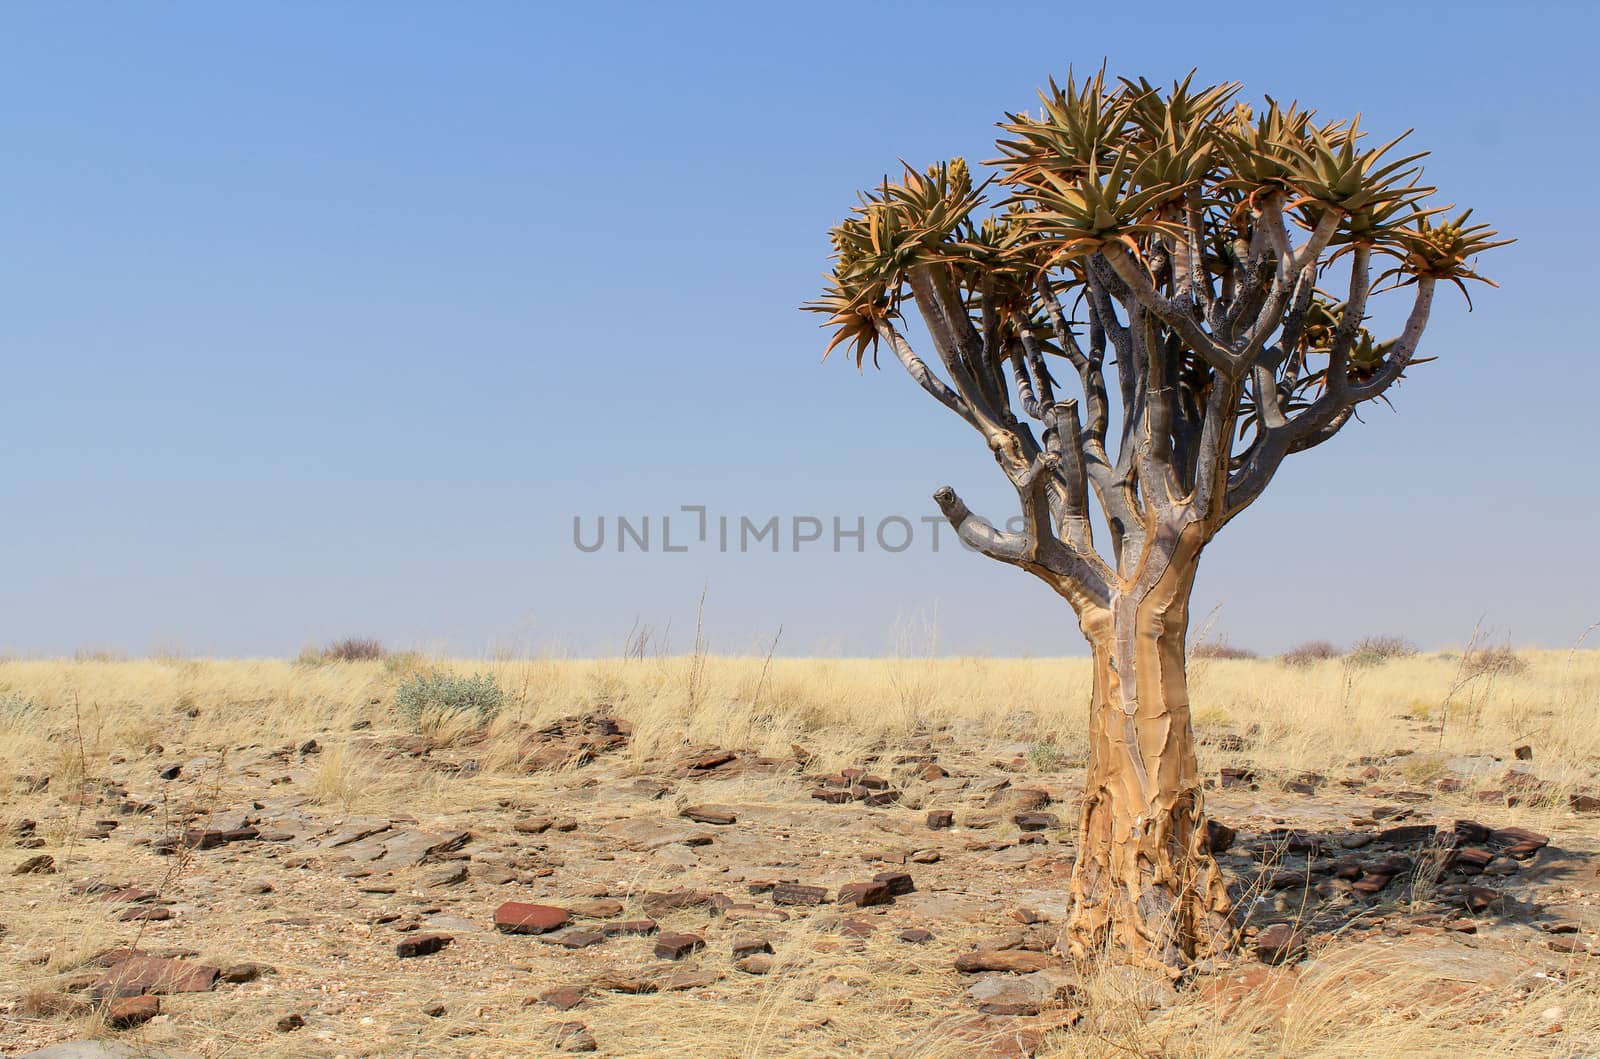 Quiver tree (Aloe dichotoma) in the Namib desert landscape. Namibia